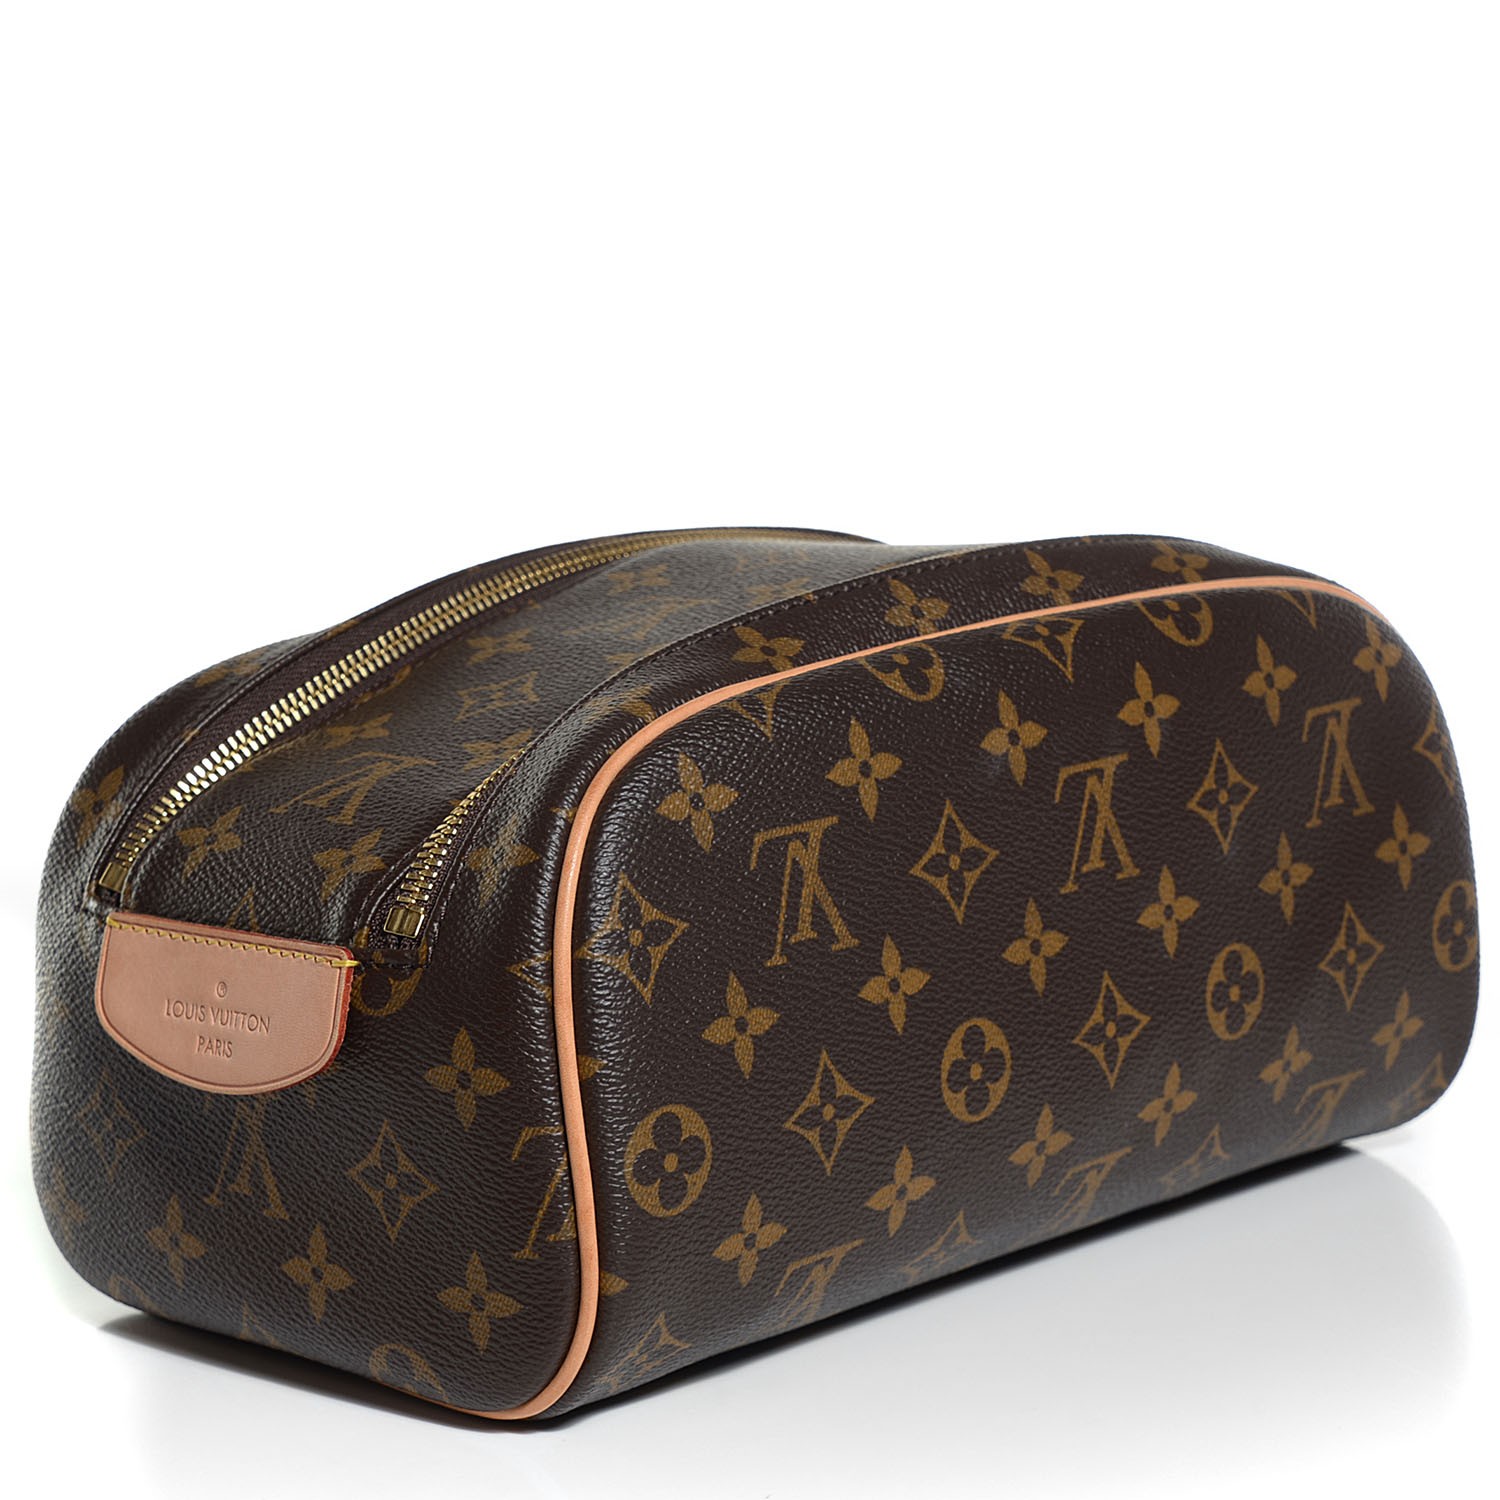 Louis Vuitton Monogram King Size Toiletry Bag 101261 Fashionphile The brand's commitment to expert craftsmanship endures, with each. louis vuitton monogram king size